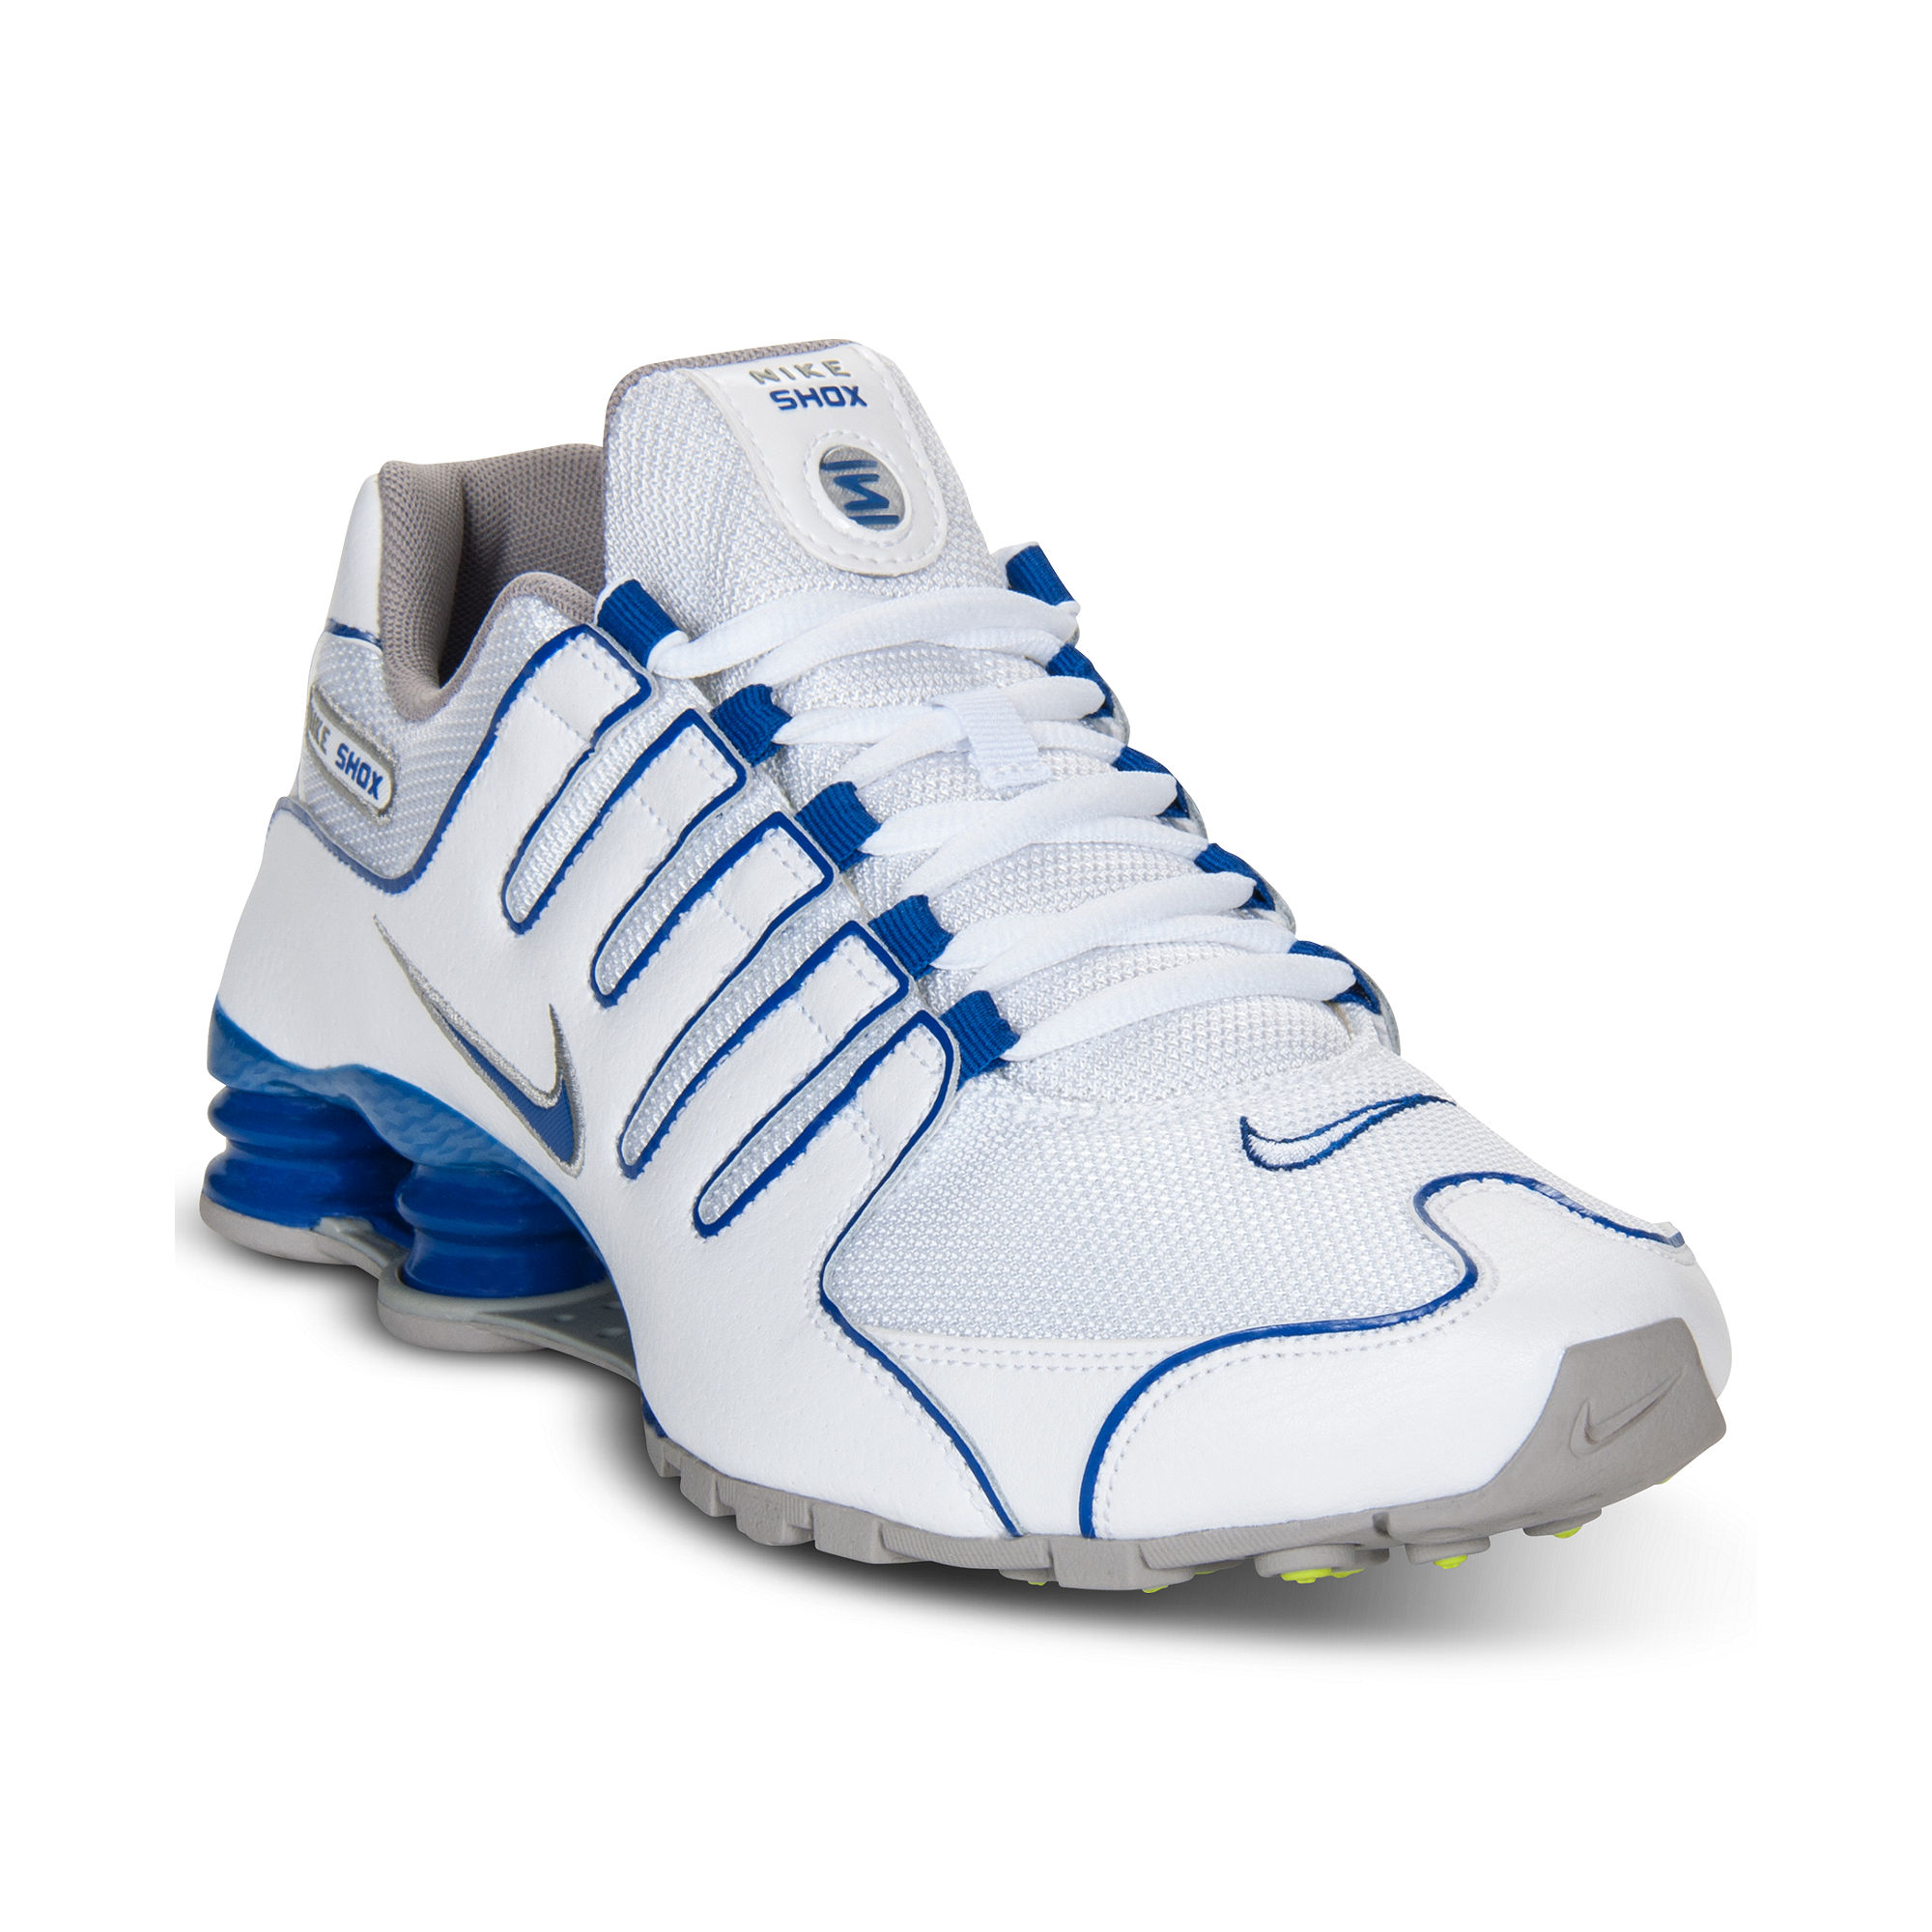 Lyst - Nike Shox Nz Eu Sneakers in White for Men